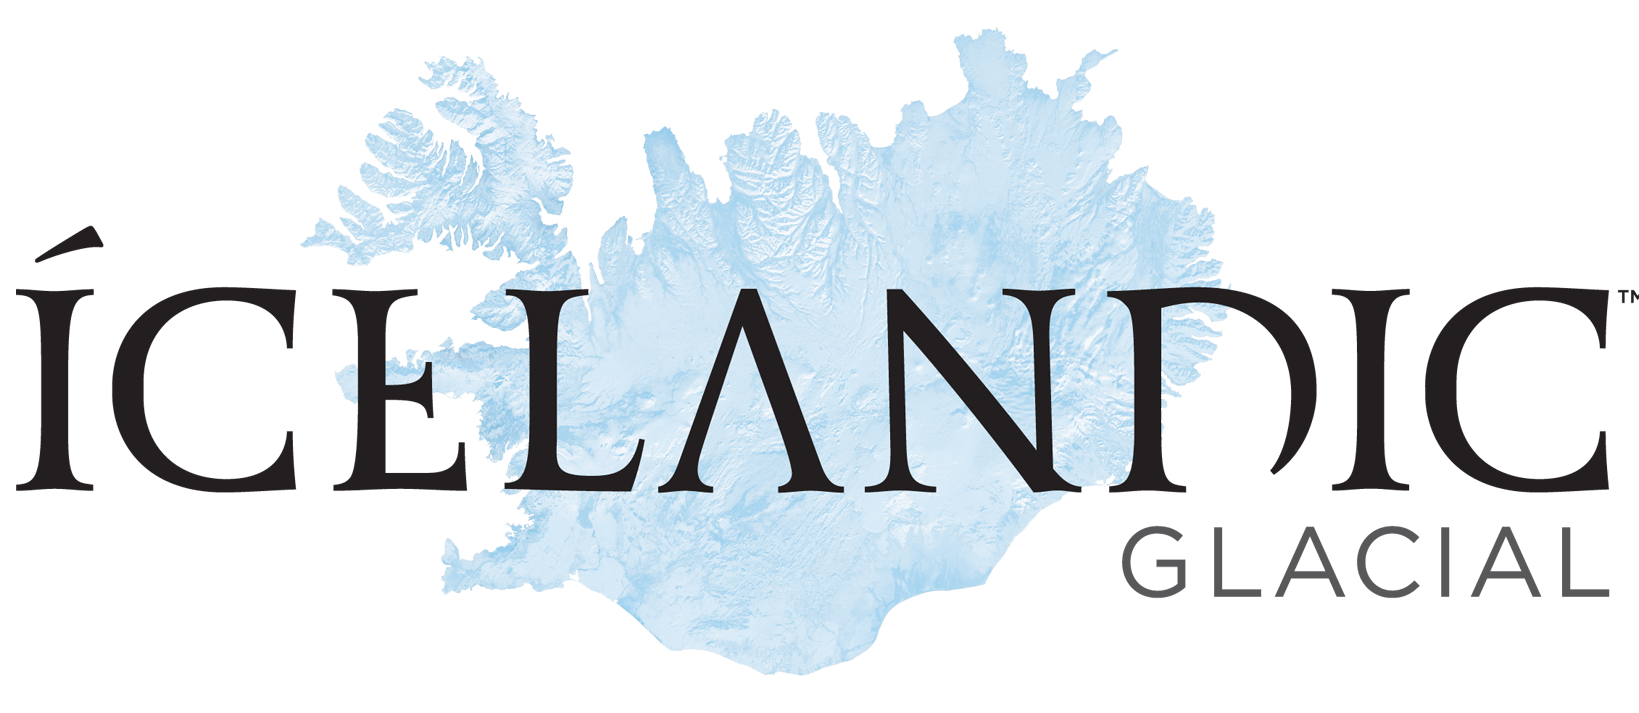 icelandic logo